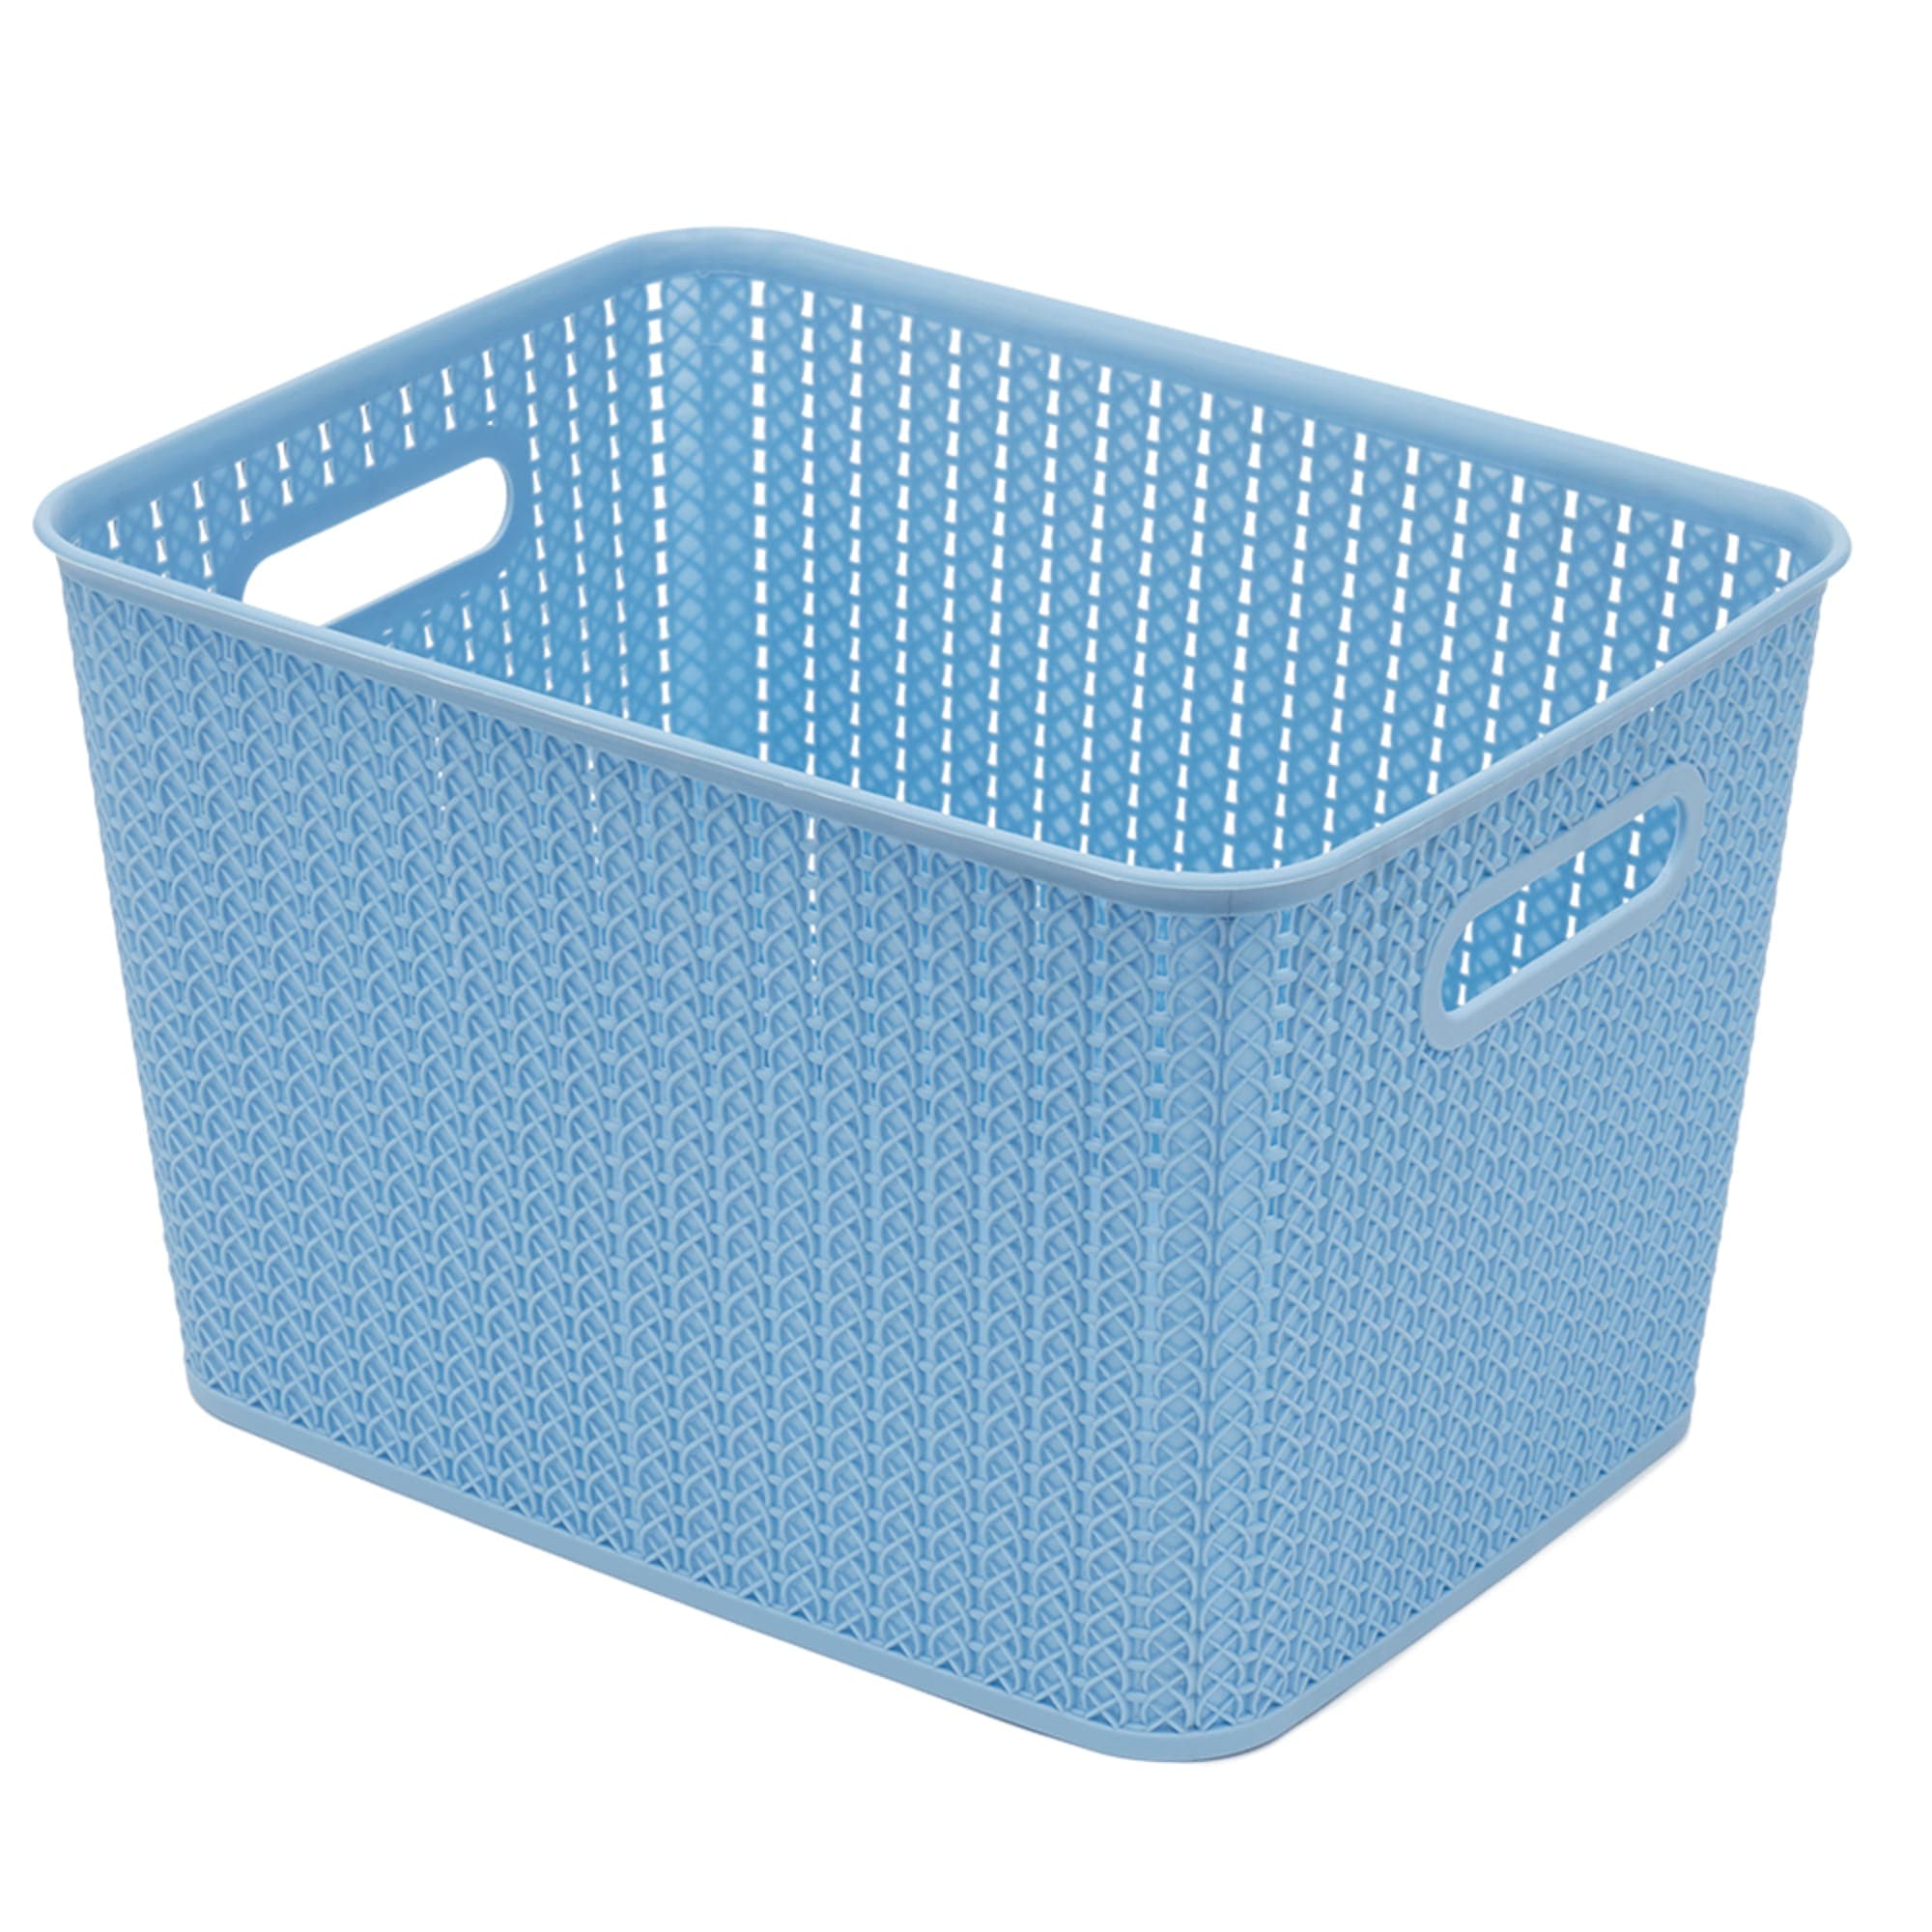 Home Basics 20 Liter Plastic Basket With Handles, Blue $6 EACH, CASE PACK OF 4